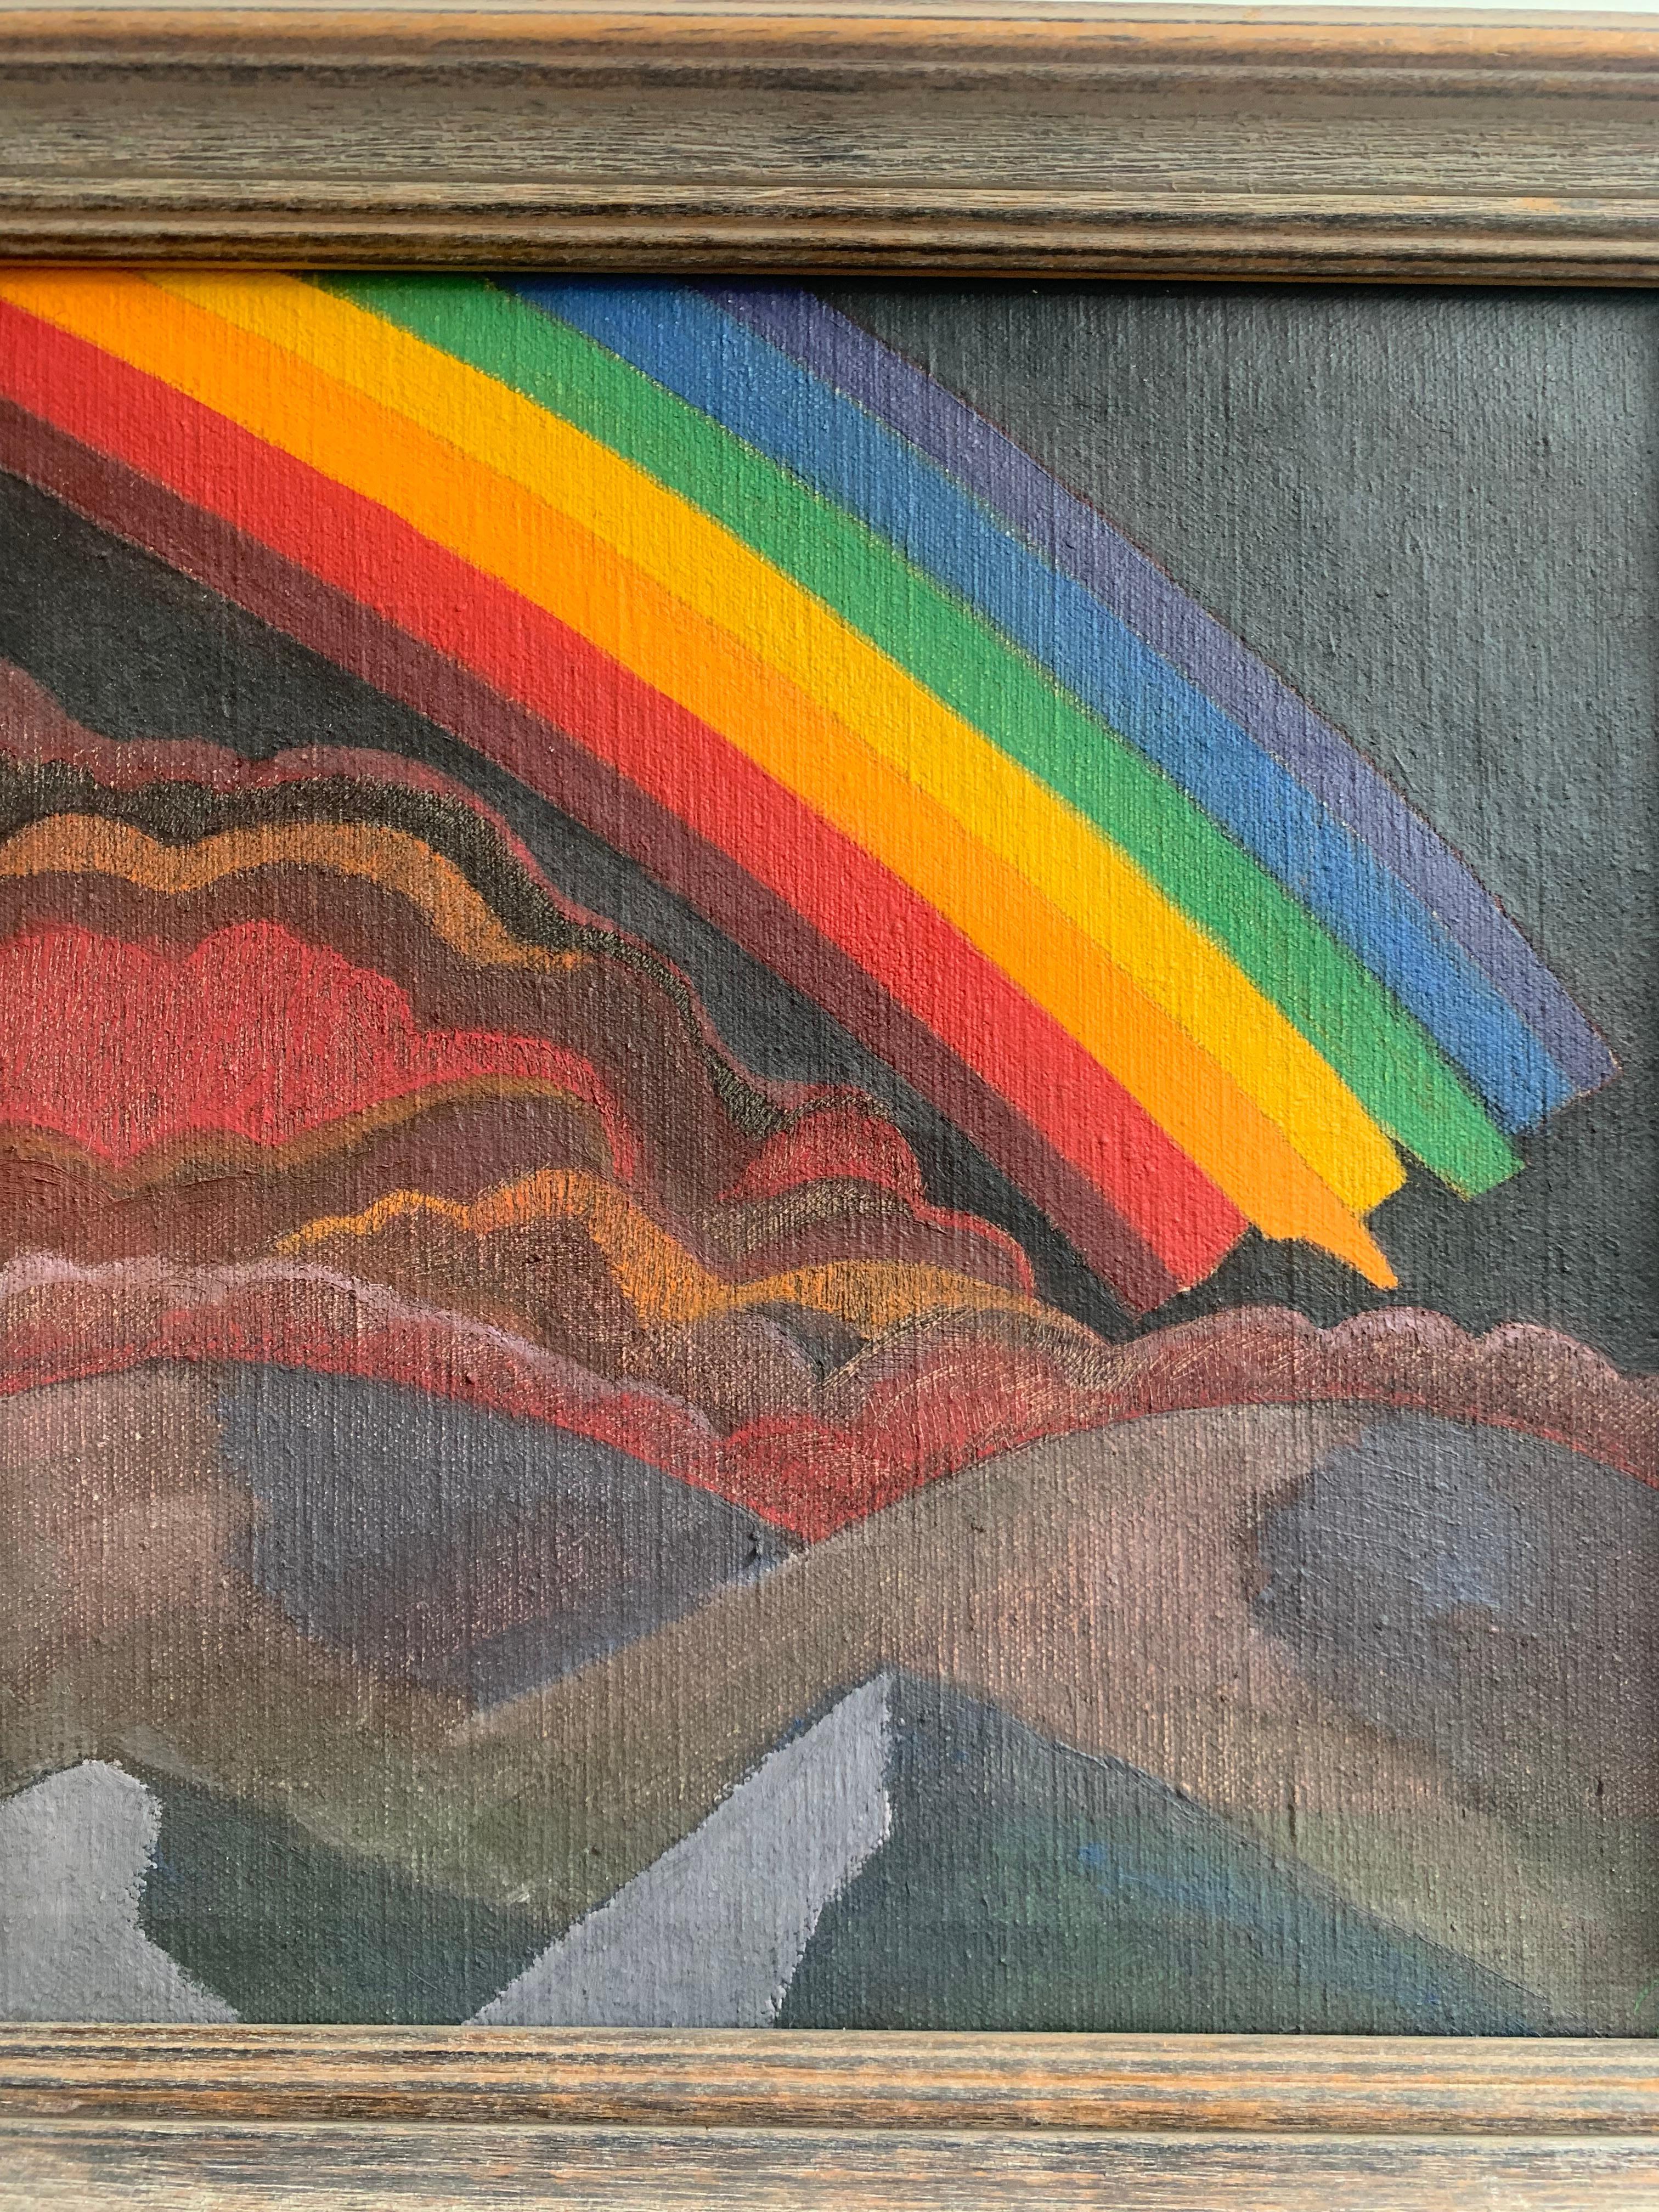 American Ed Beardsley Painting “Midnight Rainbow”, 1980, Signed and Framed